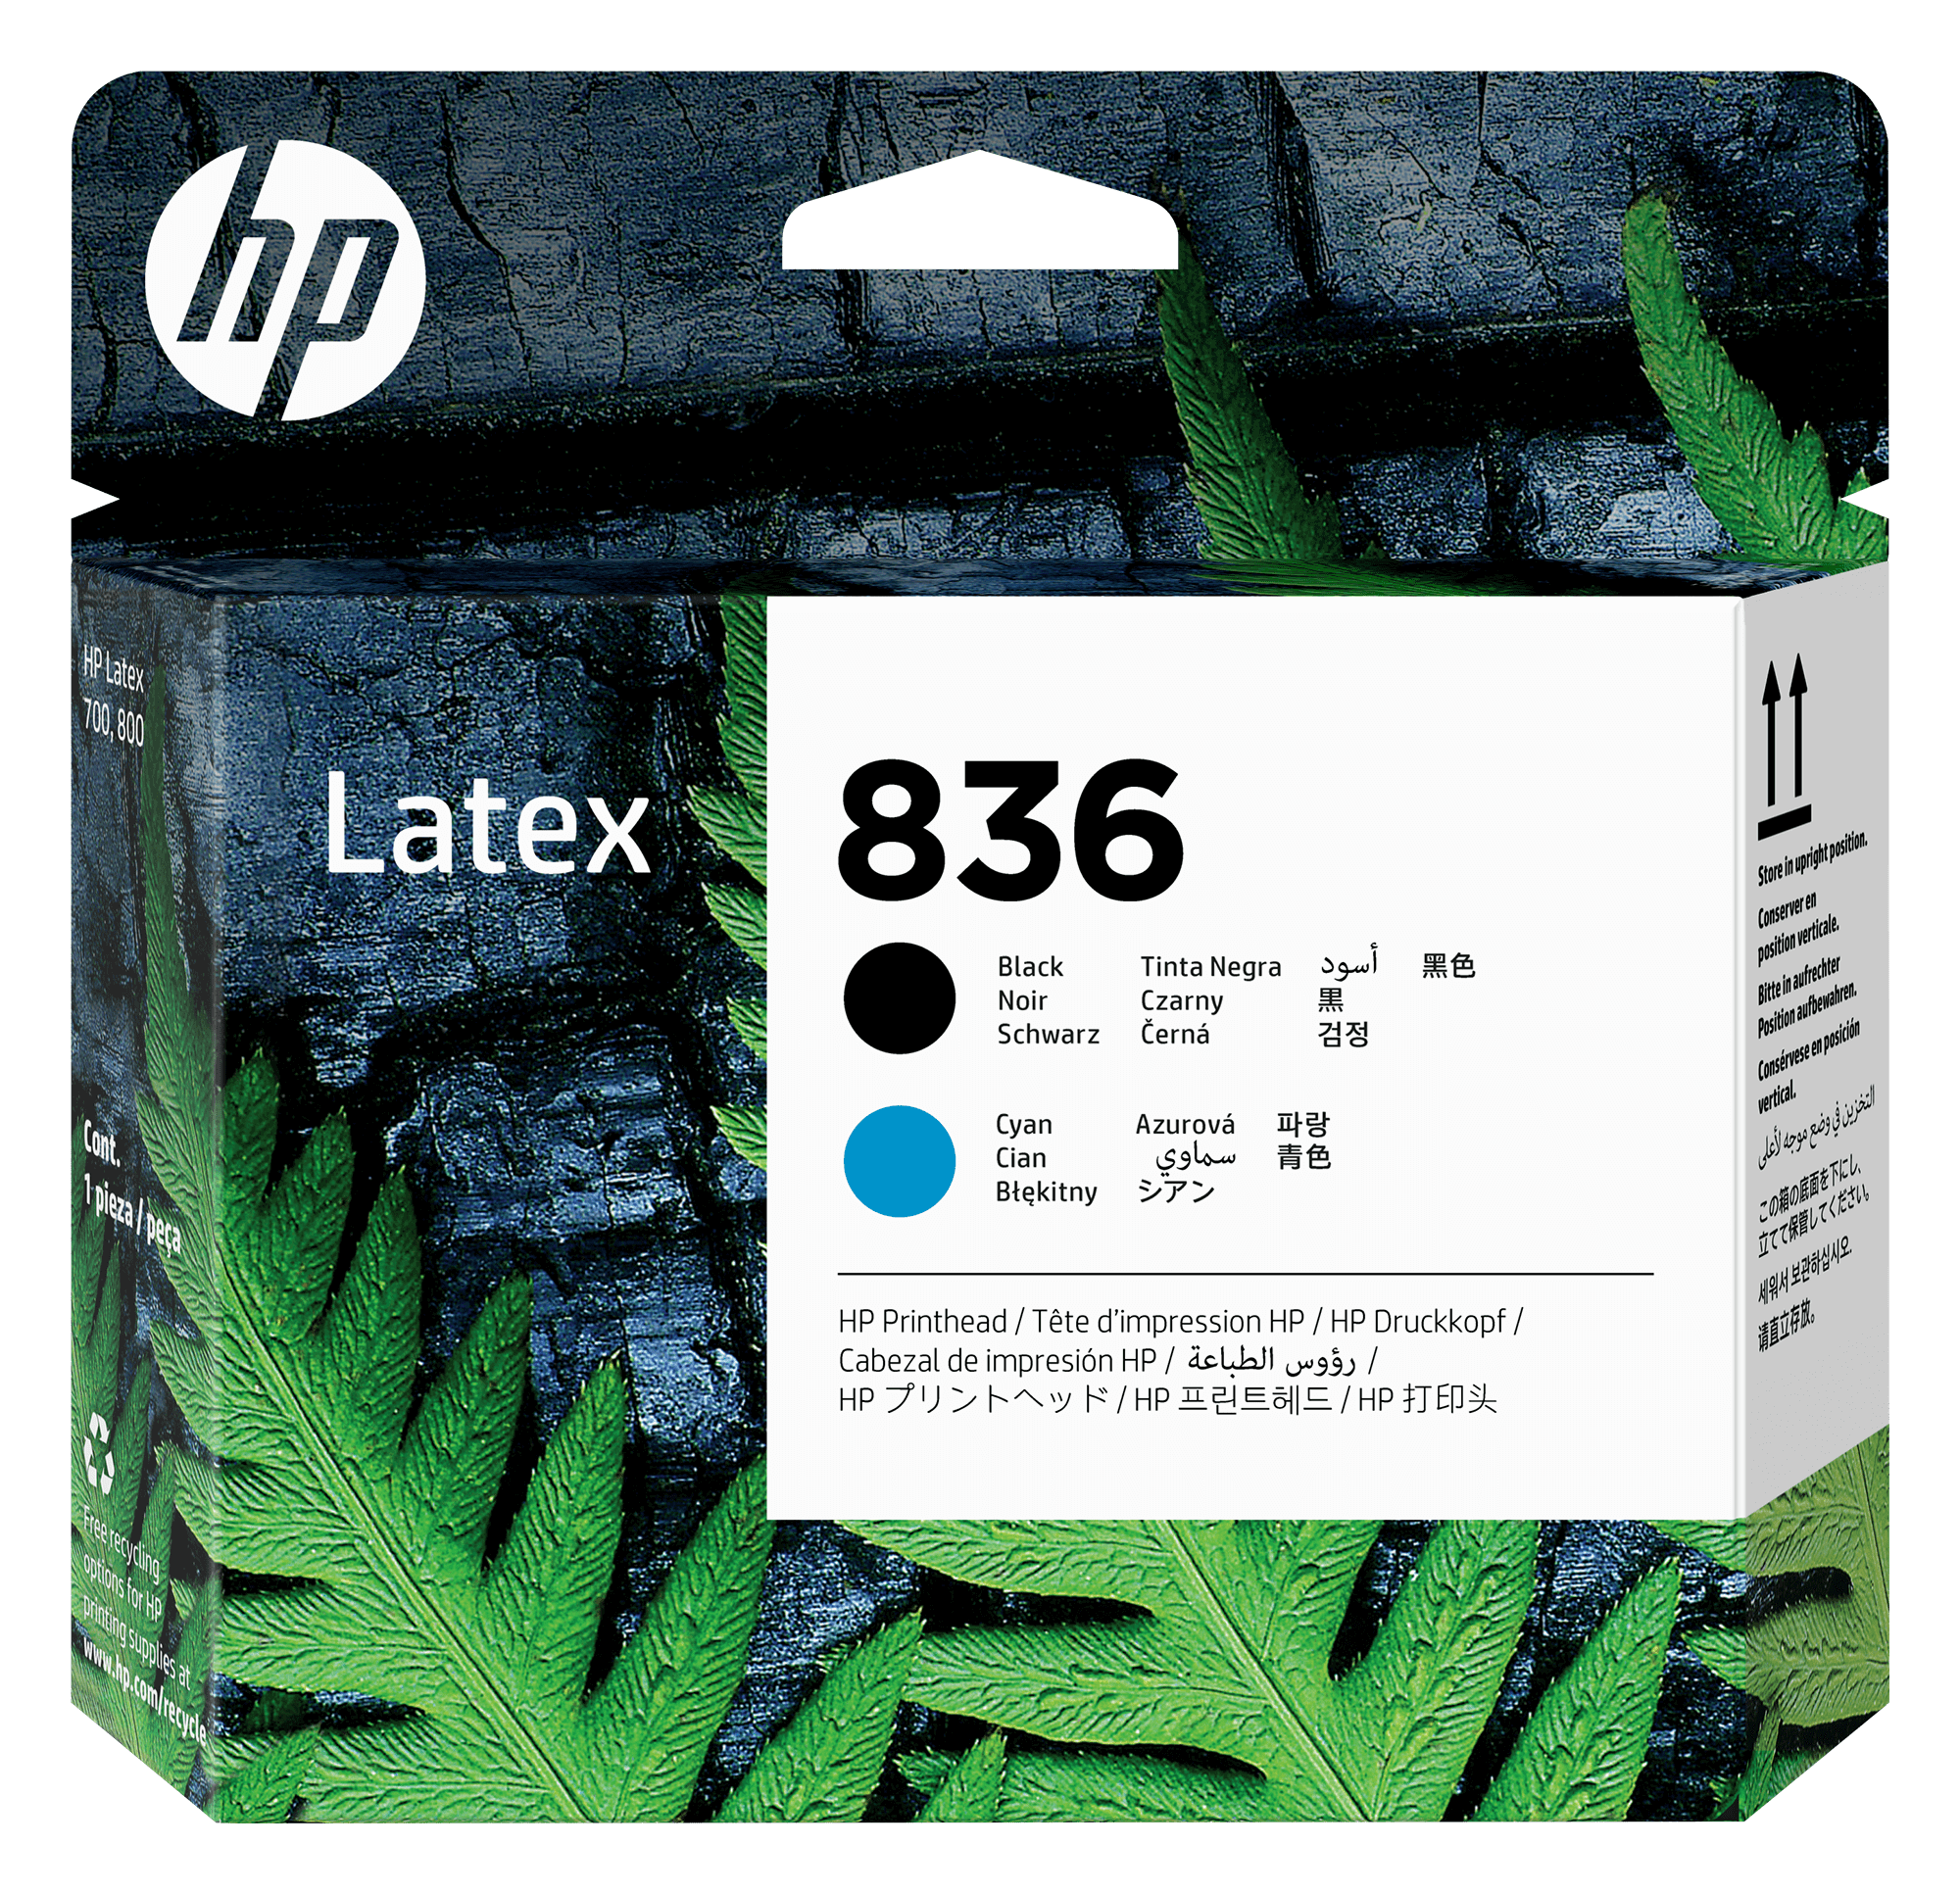 HP 836 Black/Cyan Latex Printhead